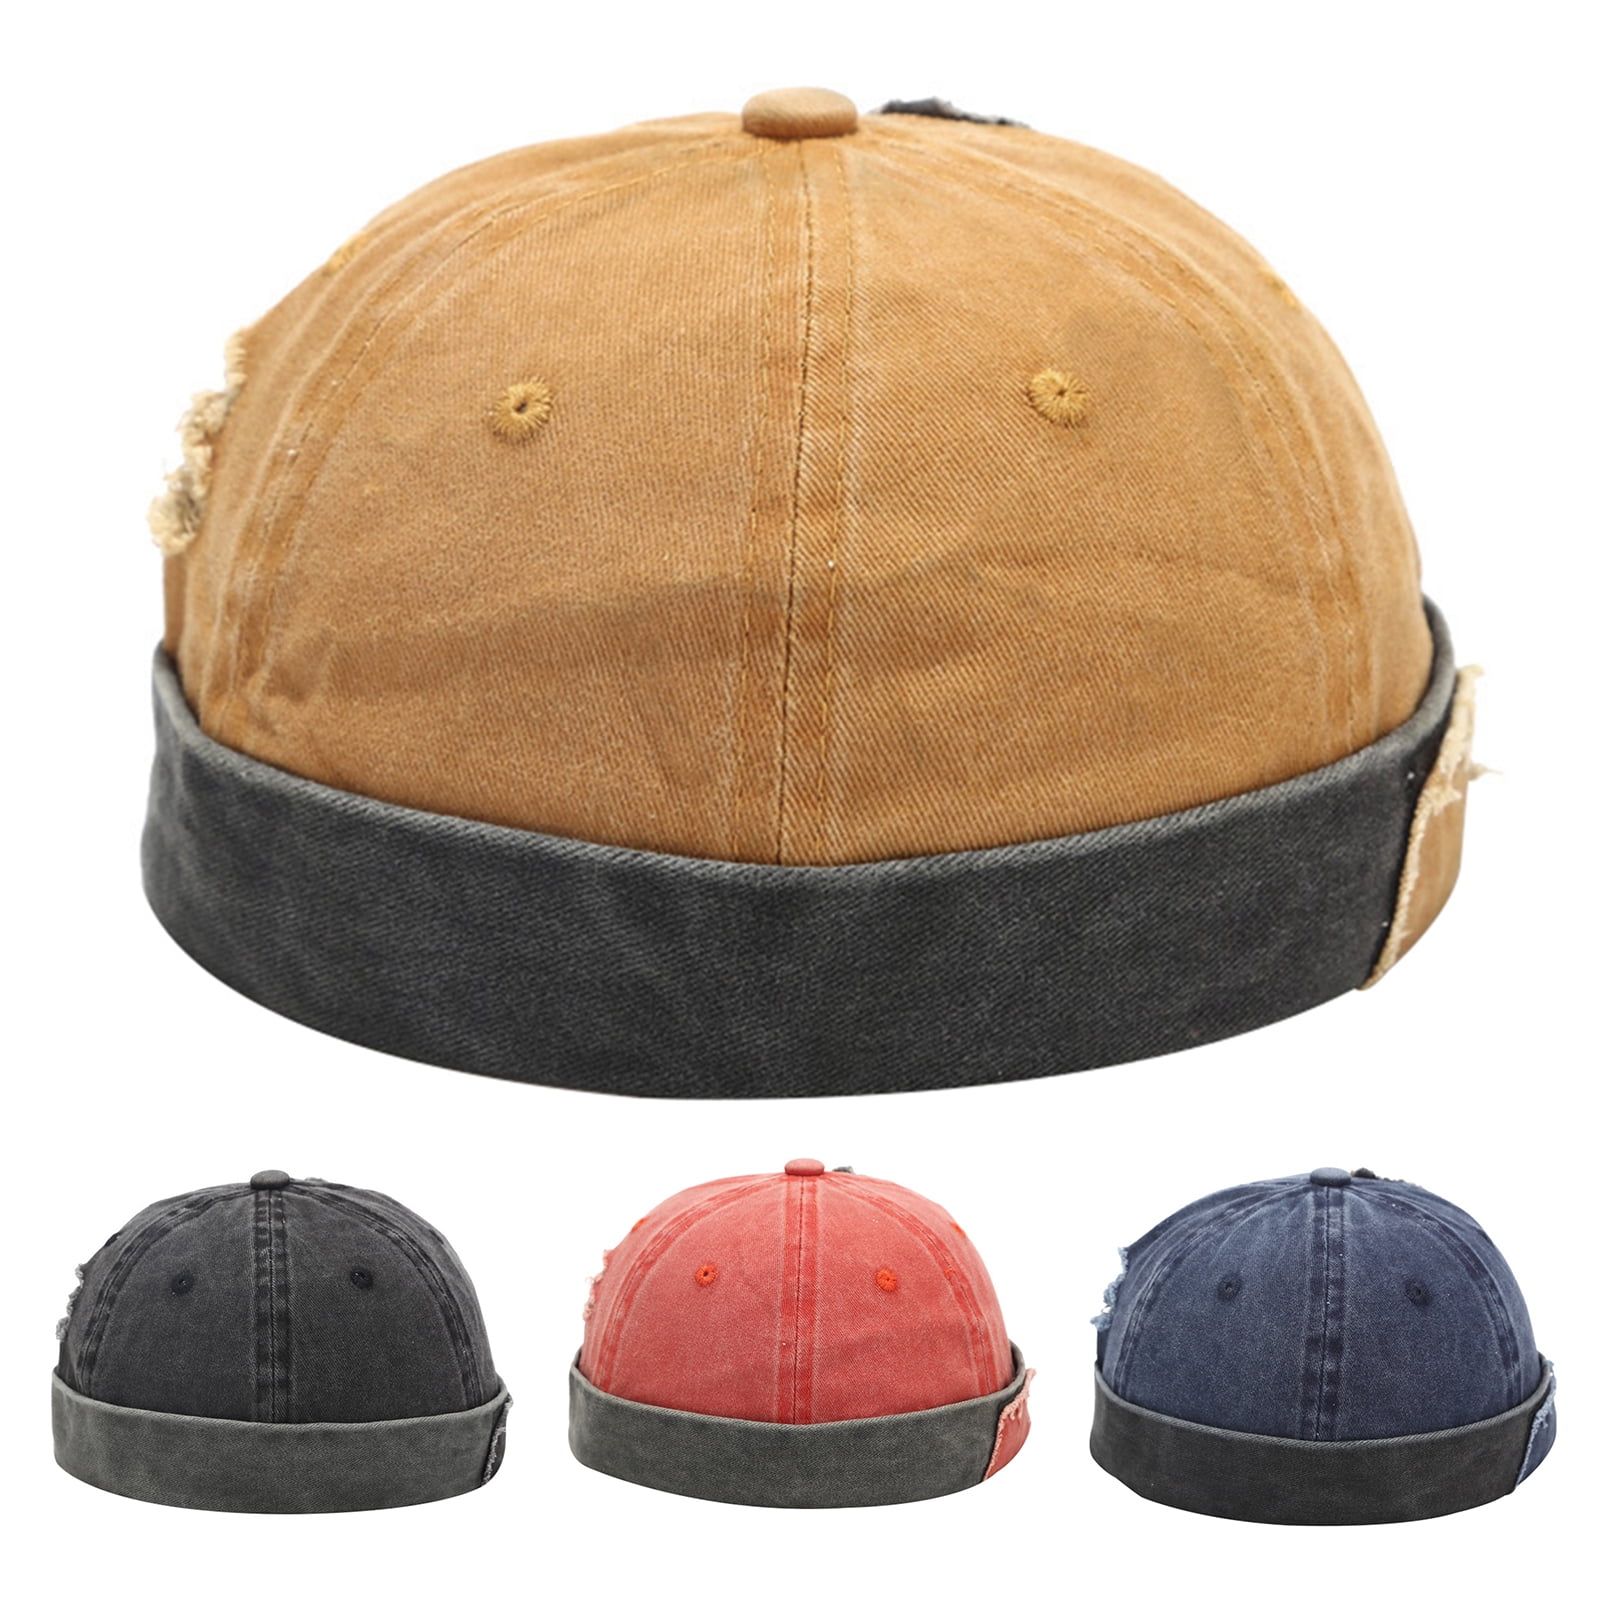 Bodychum Women Sun Visors Foldable Straw Hats Summer Beach Packable Hat  Floppy Wide Brim Cap Deep Style, Adjustable Size